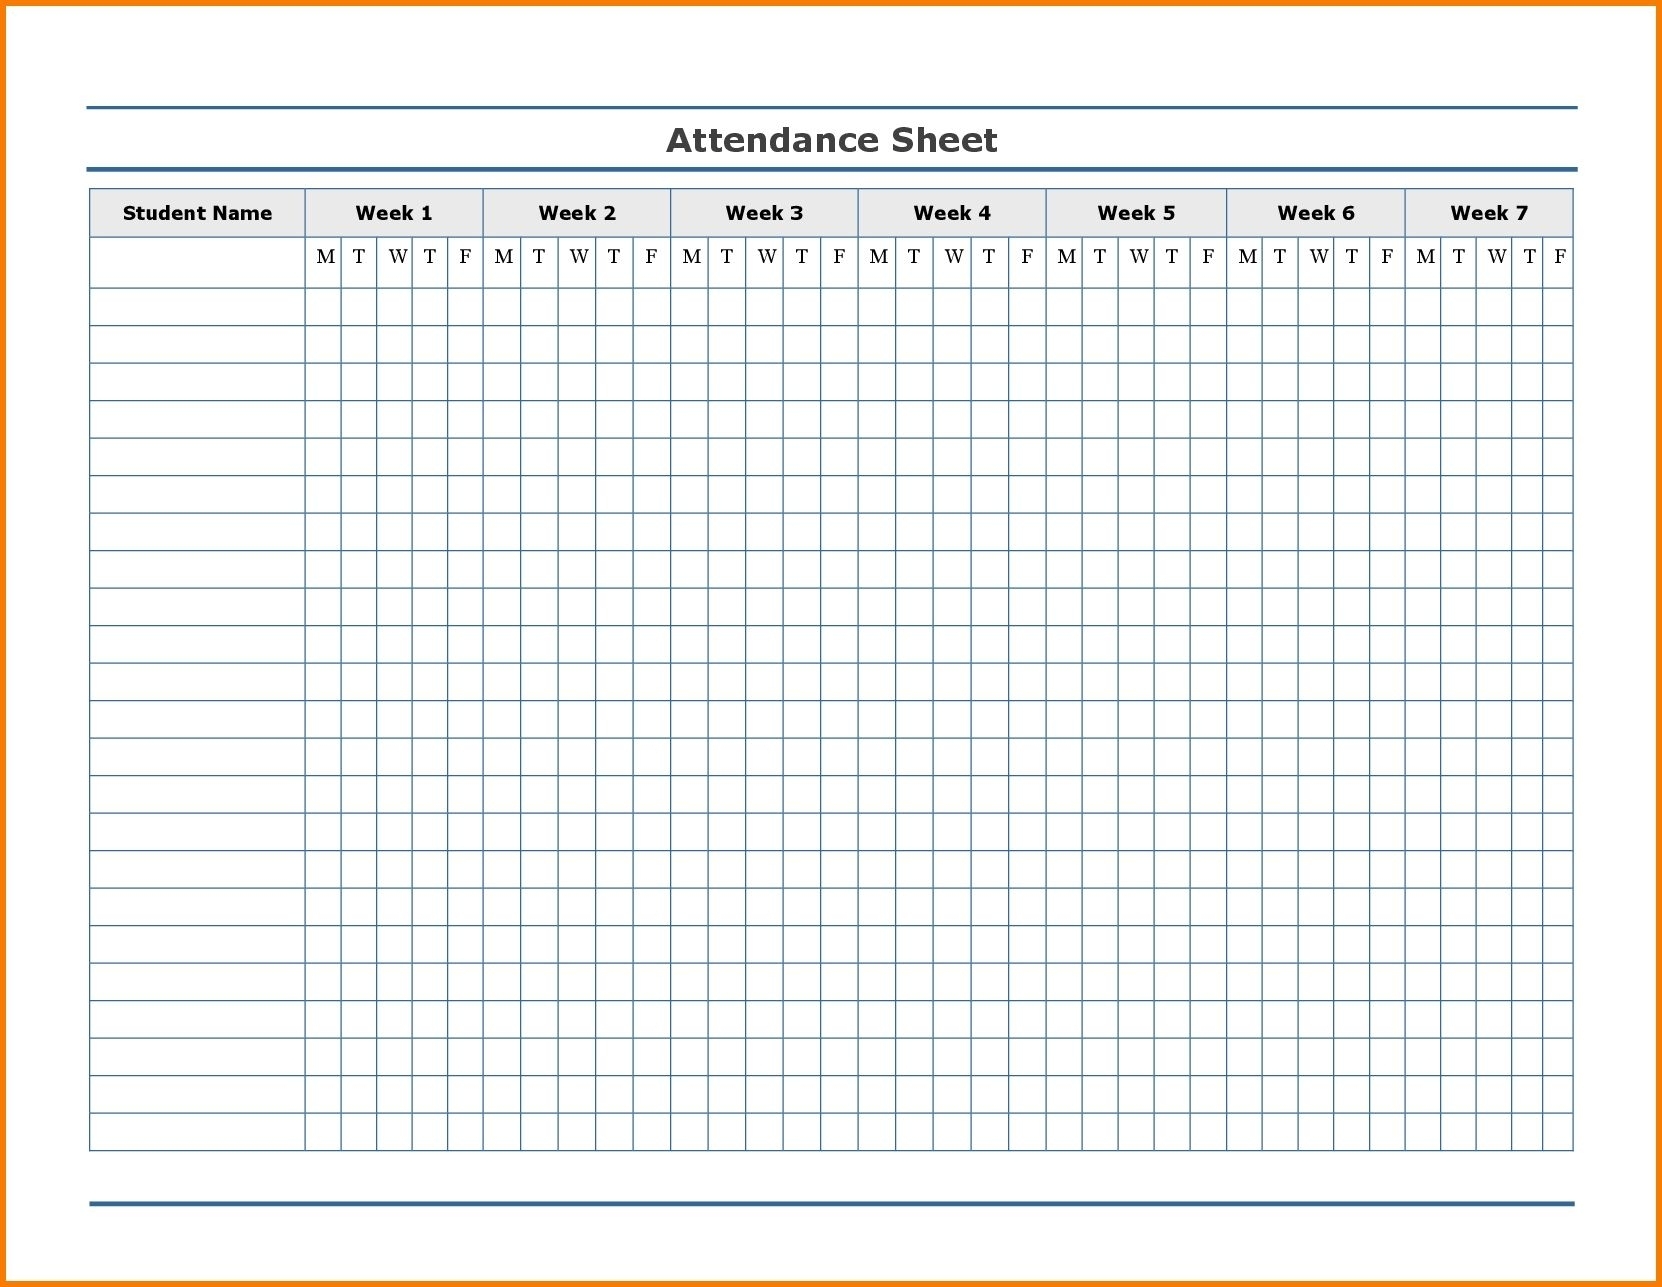 Free Employee Attendance Calendar | Employee Tracker intended for Free Printableemployee Attendance Calendars 2020